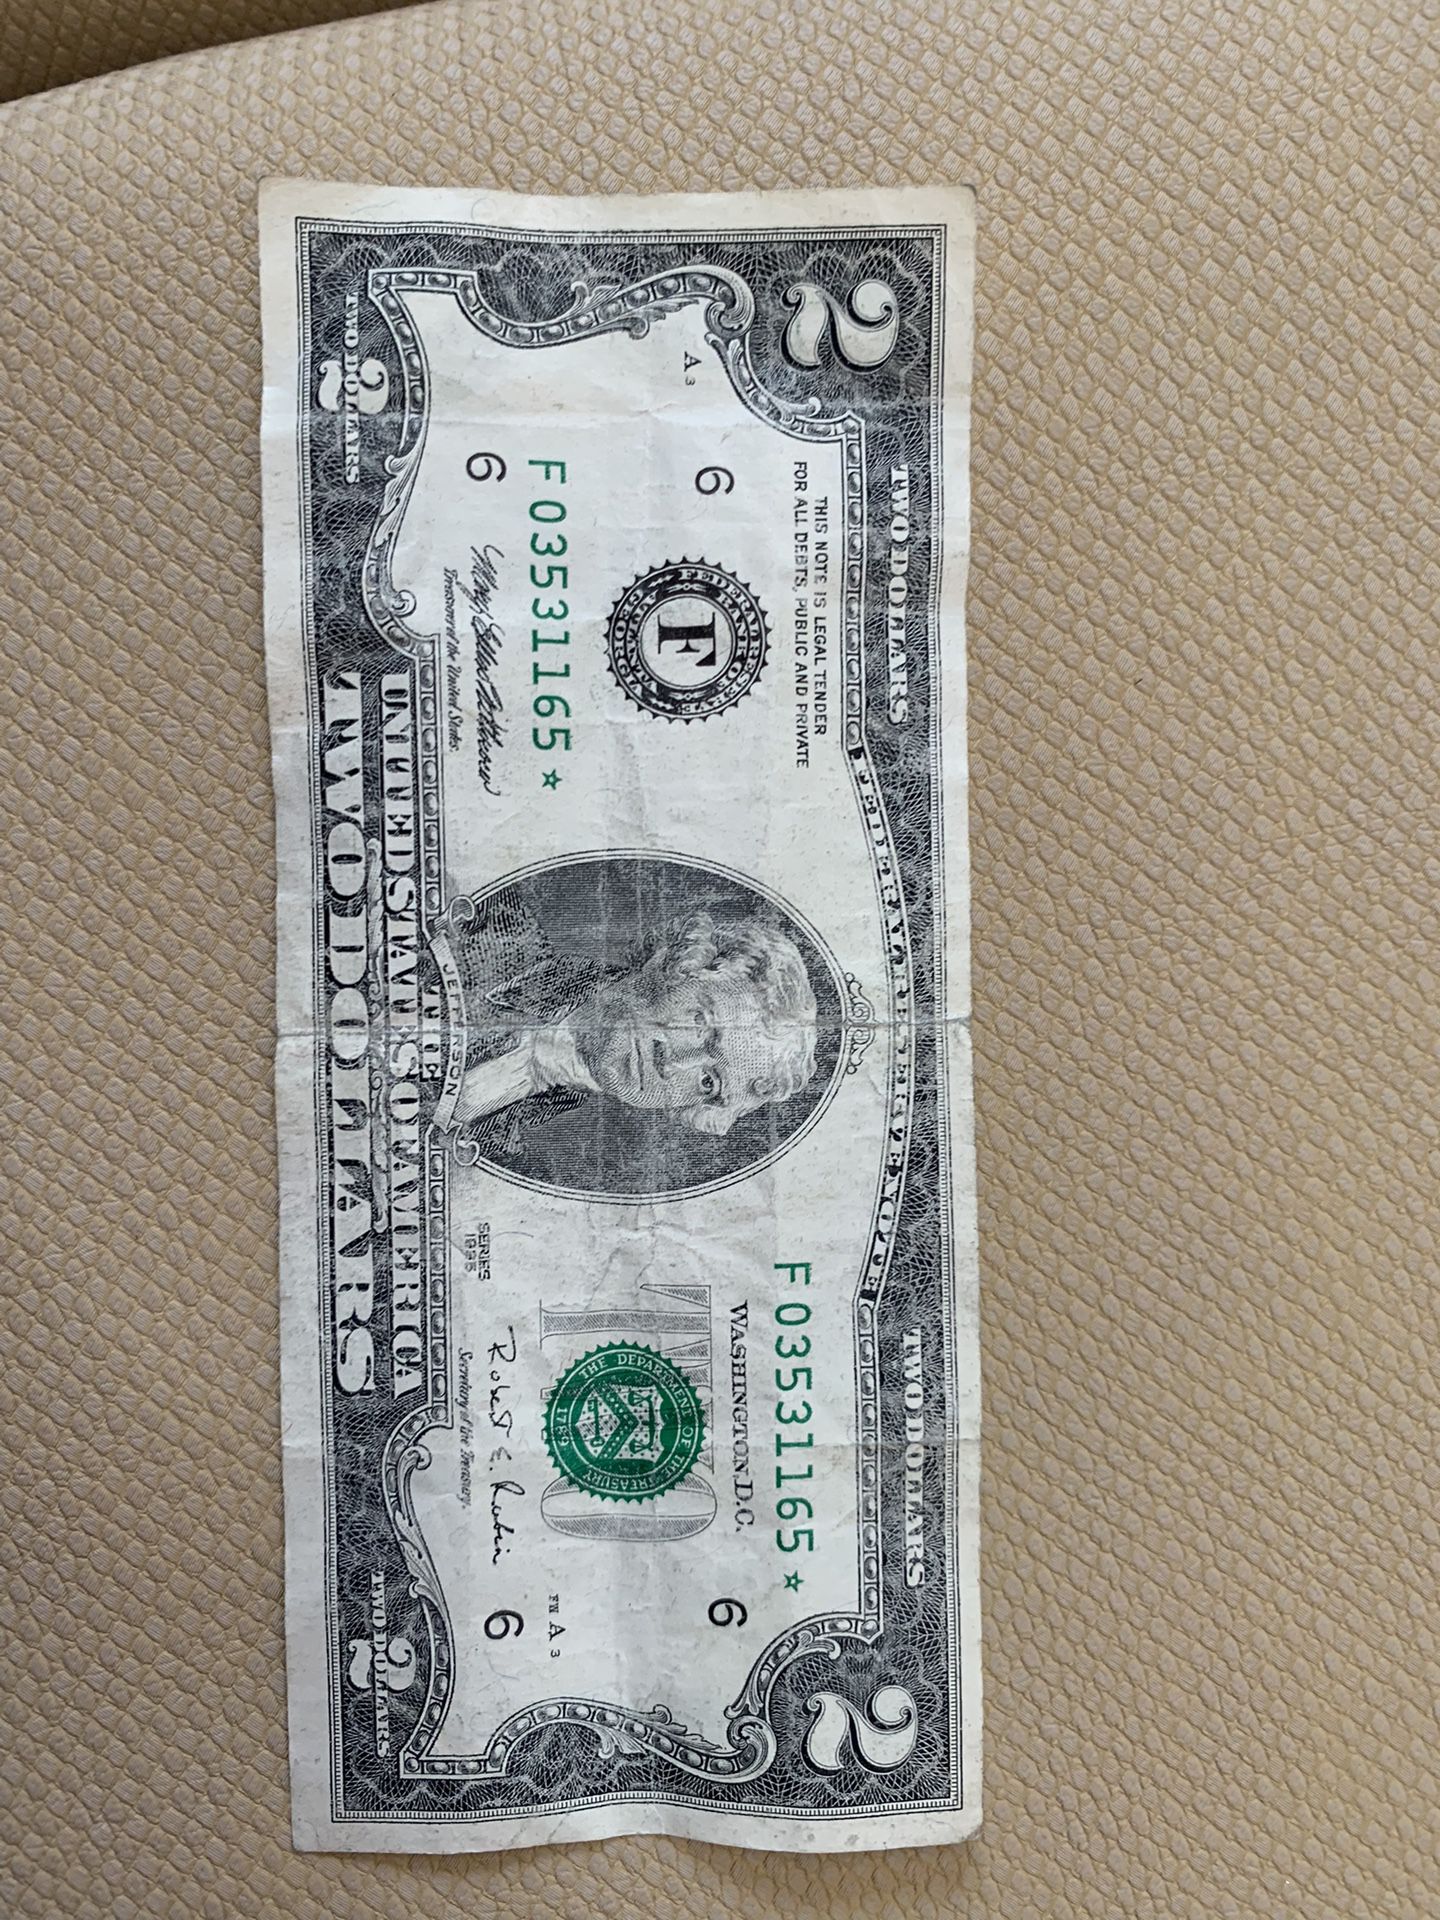 1995 $2 Dollars Star